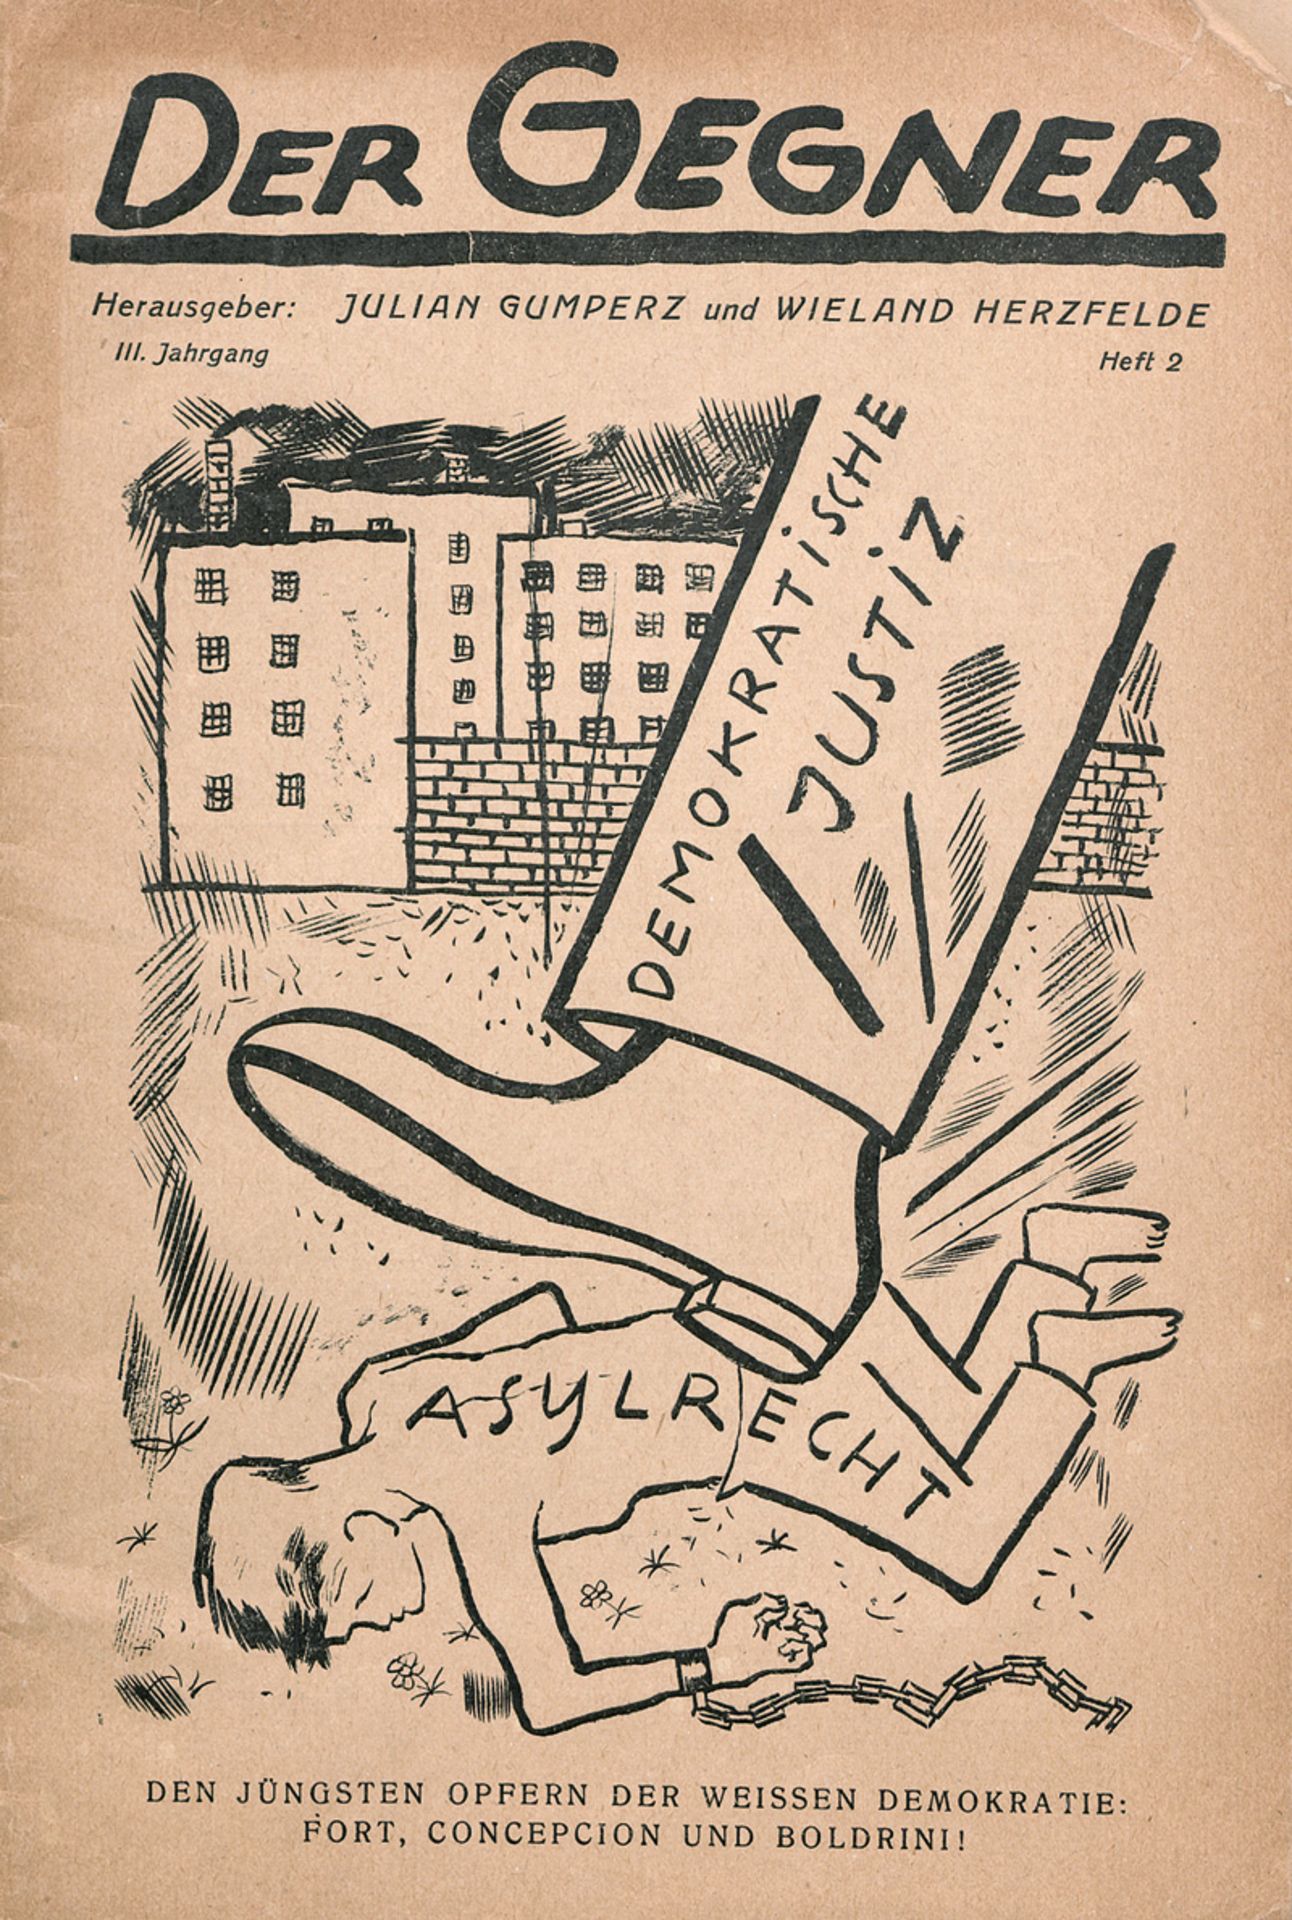 Gegner, Der: III. Jahrgang, 1922, Heft 2